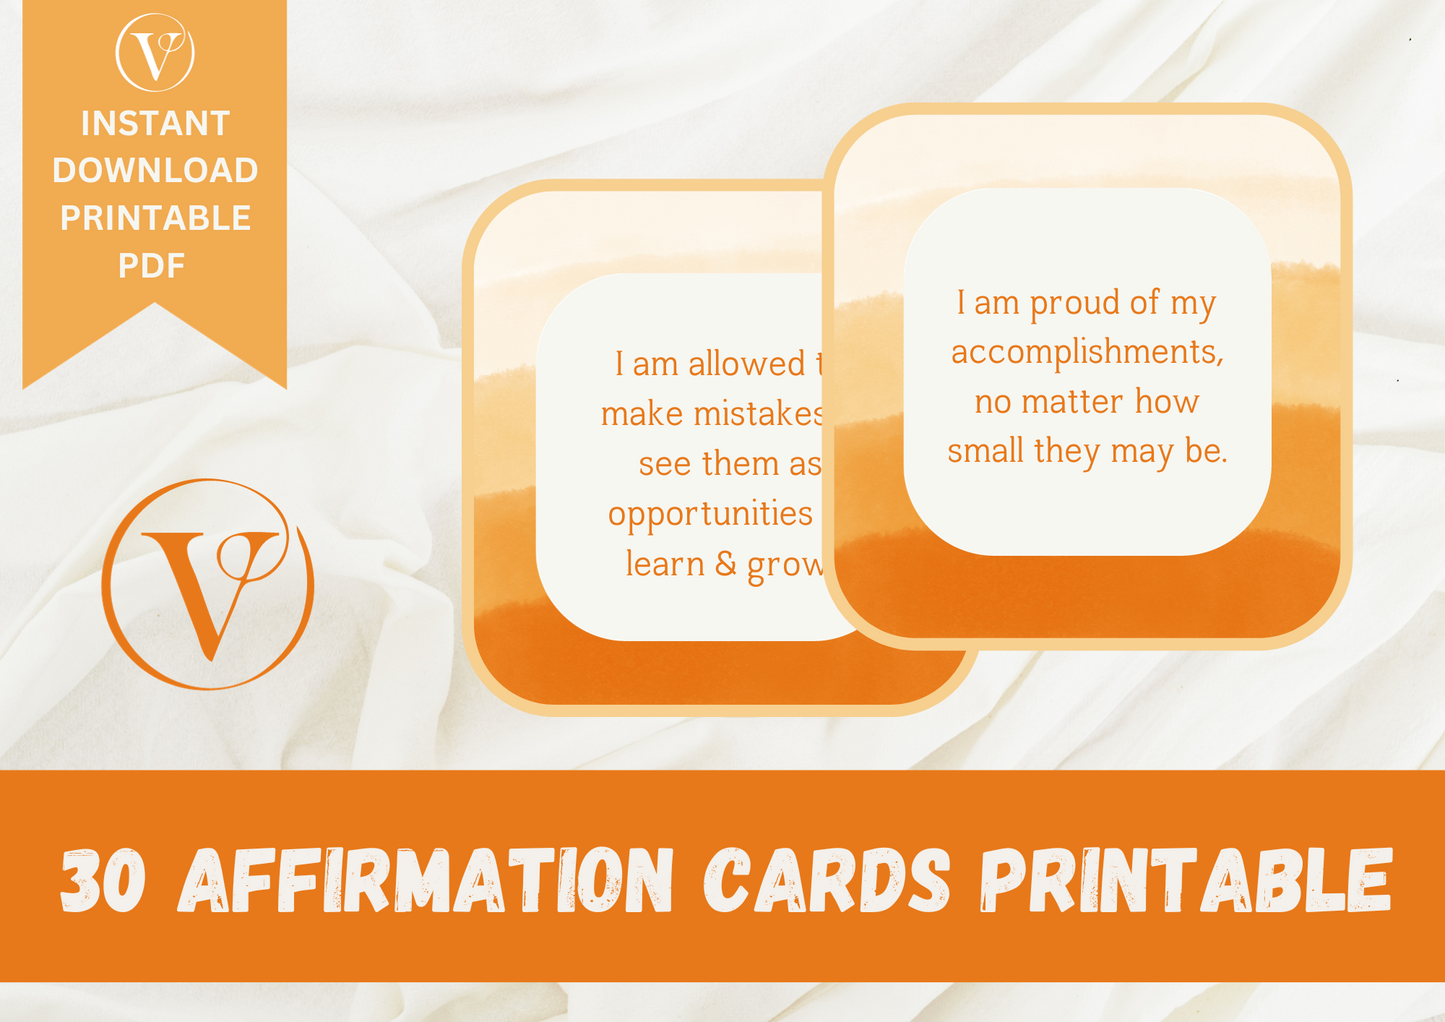 Affirmation Card Printable - Increasing Self-Esteem